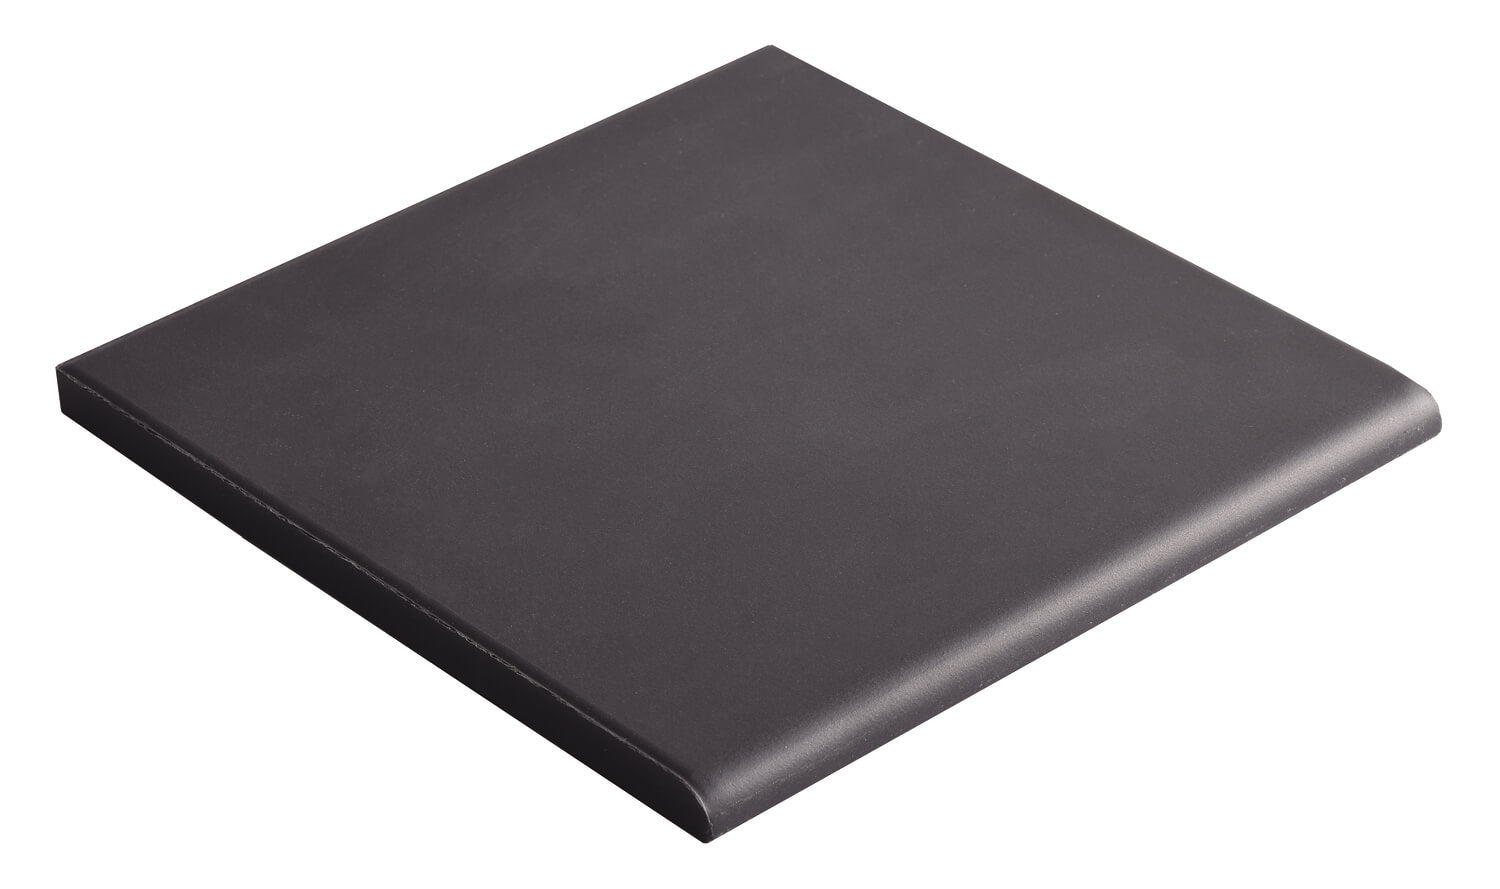 Dorset Woolliscroft Black Round Edge Slip Resistant Quarry Tile 148x148mm